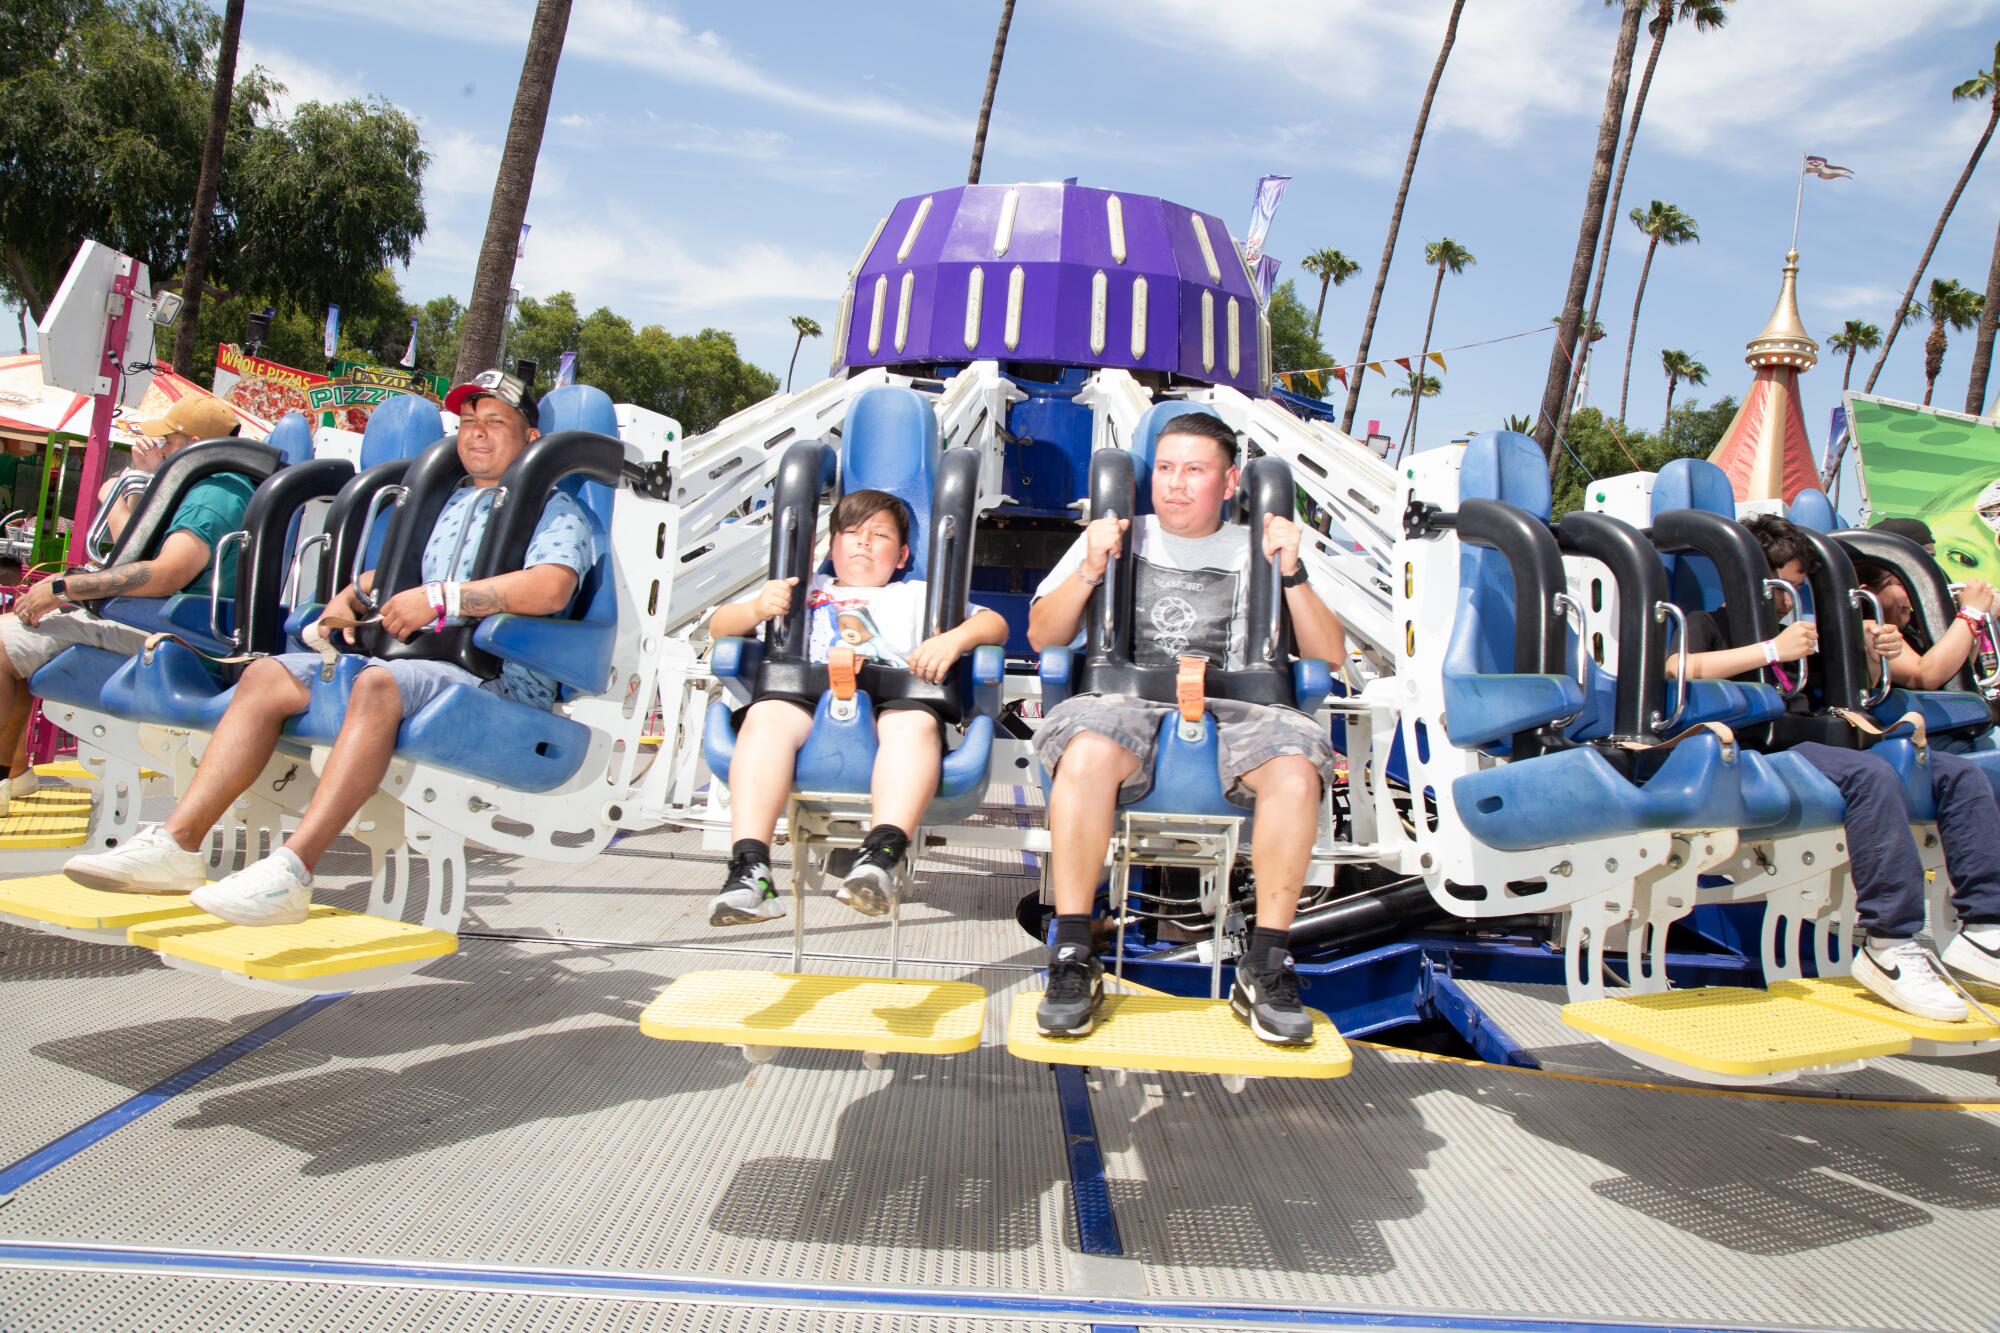 Fairgoers on amusement park rides at the Los Angeles County Fair.
